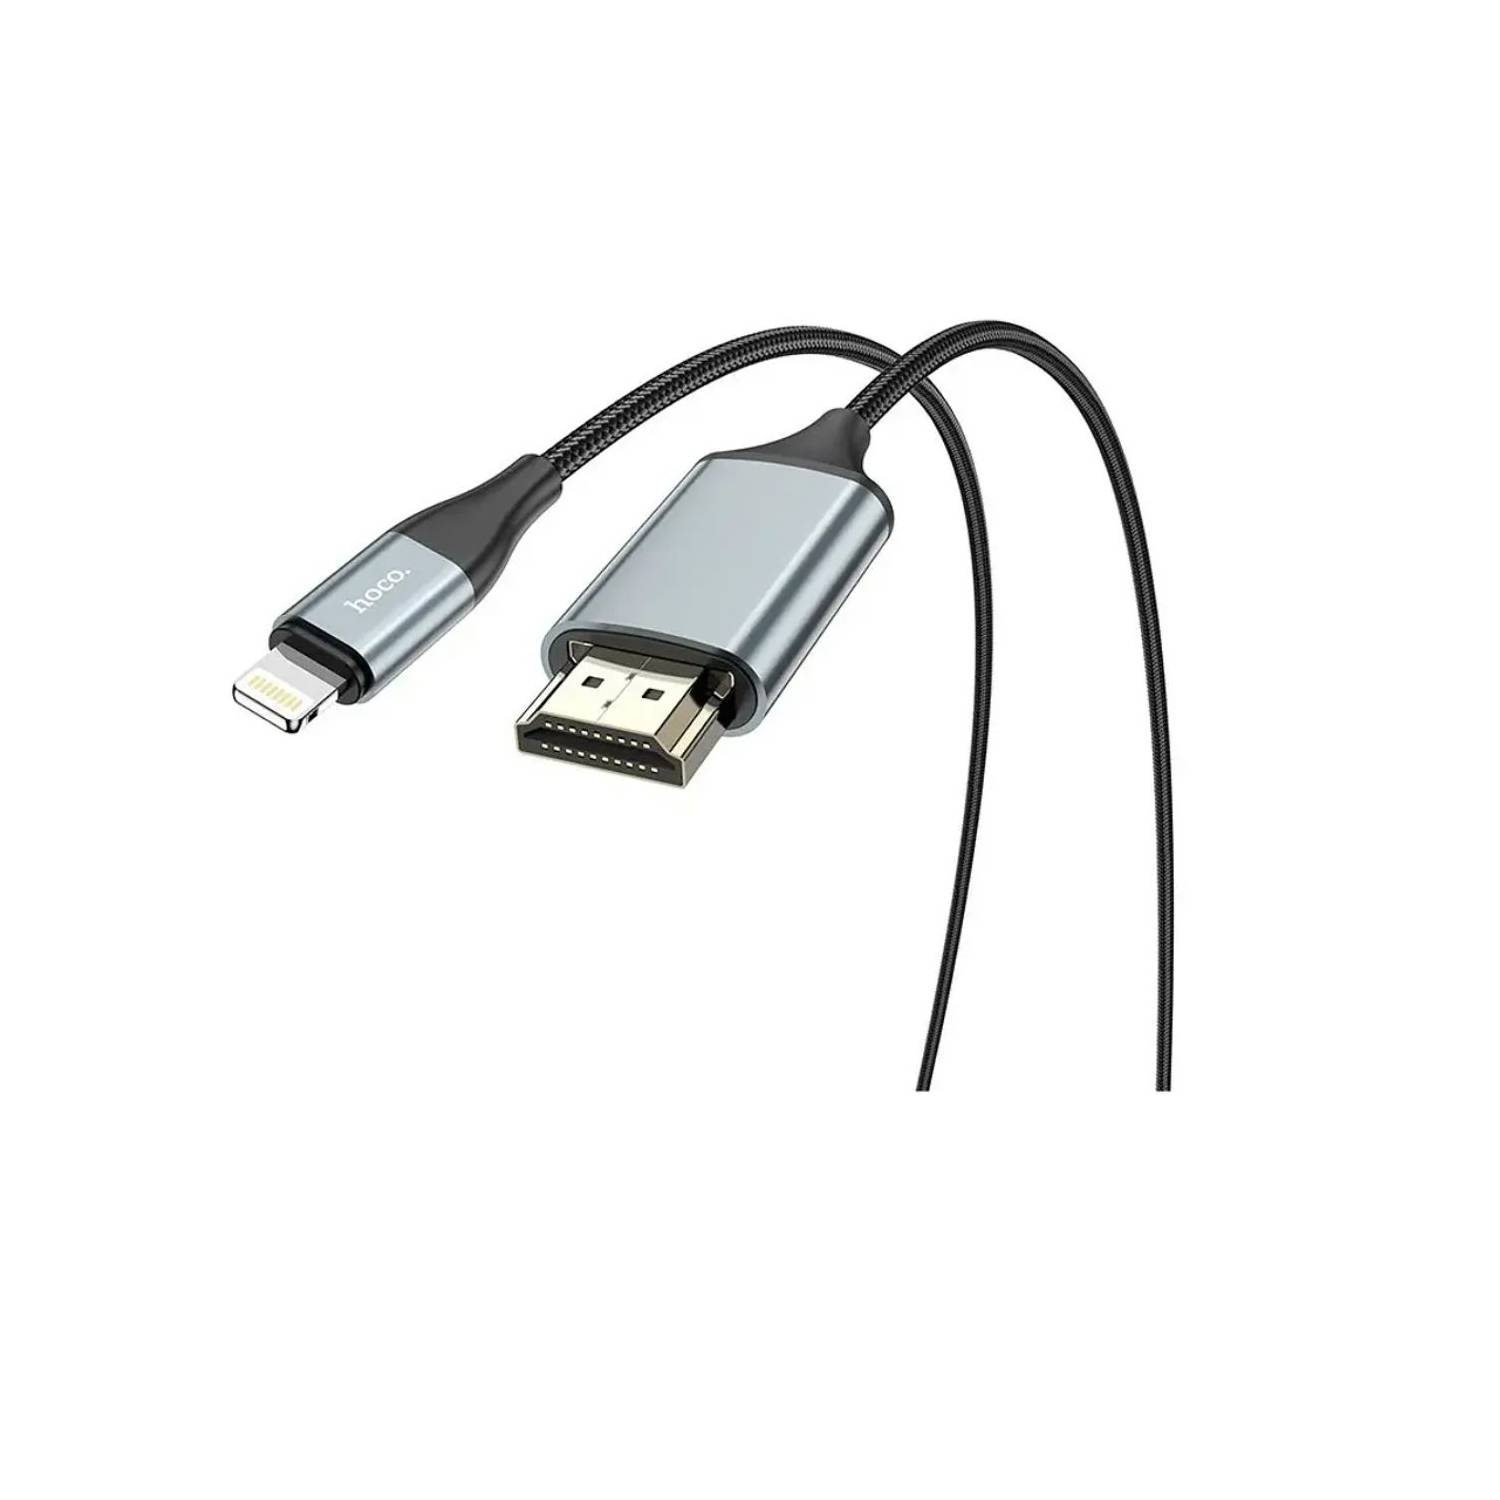 Cable Lightning to HDMI UA15 - HOCO